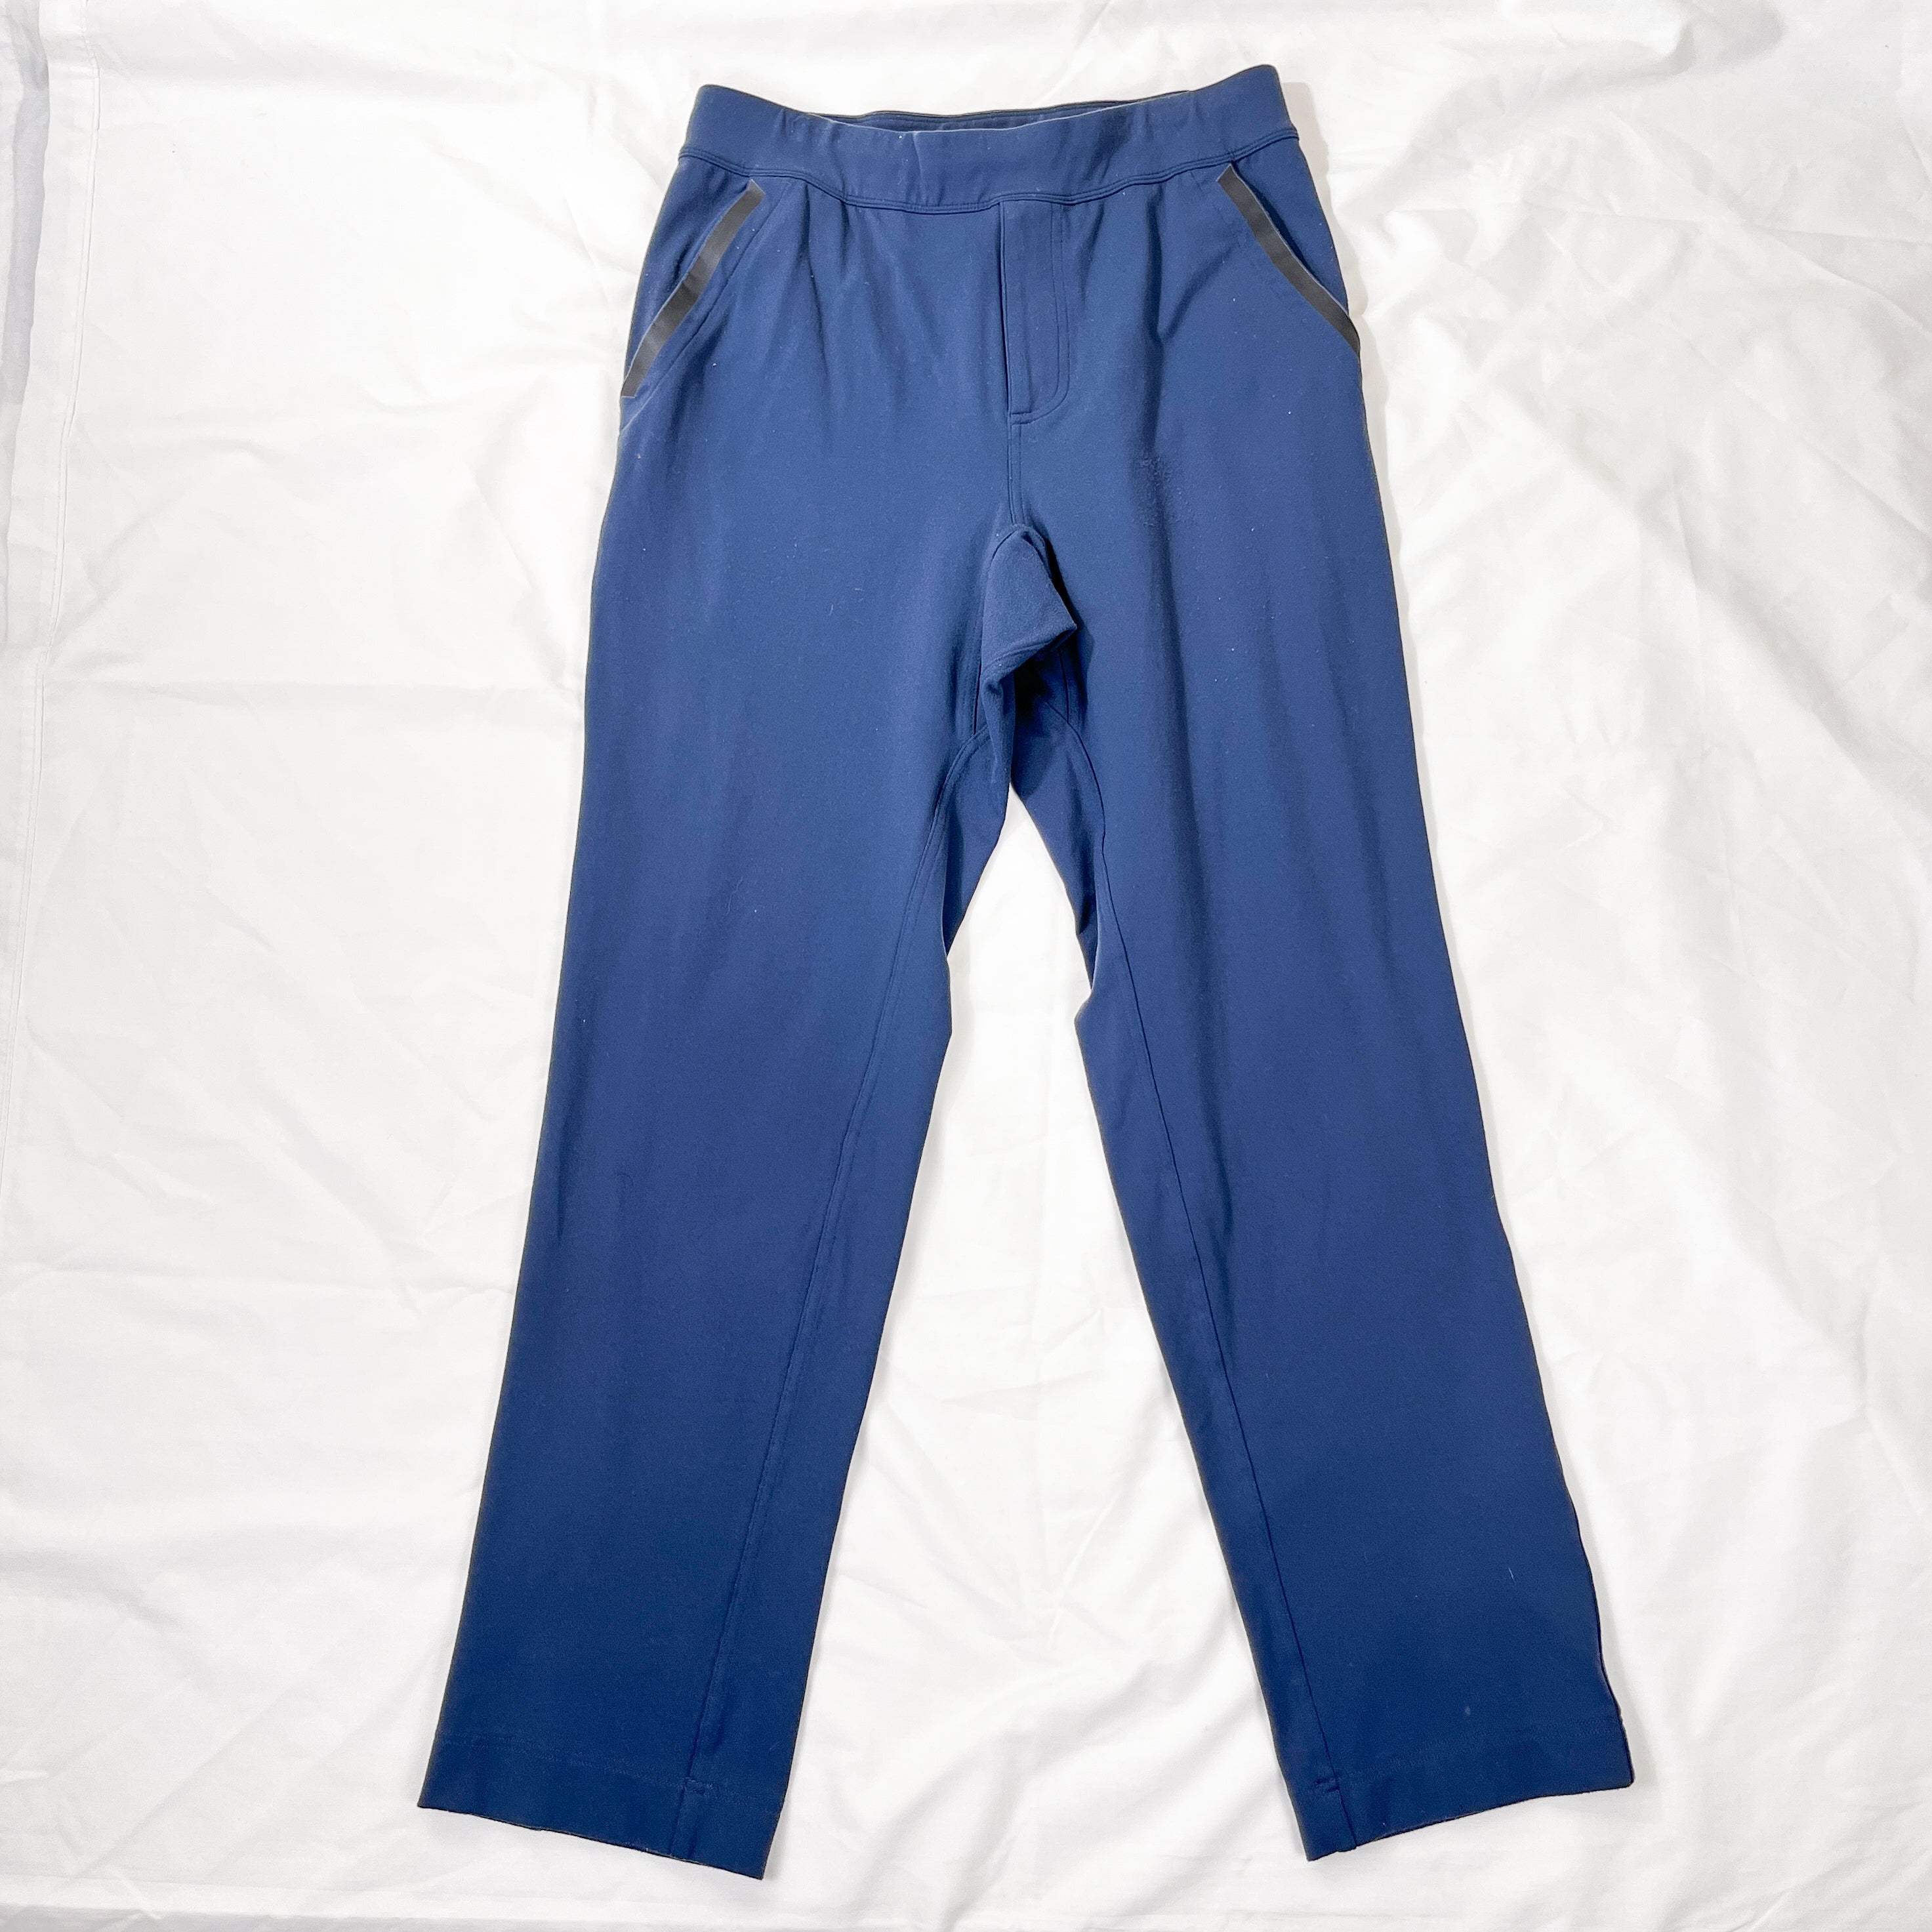 Lululemon Navy Straight-Cut Pants – Double Take